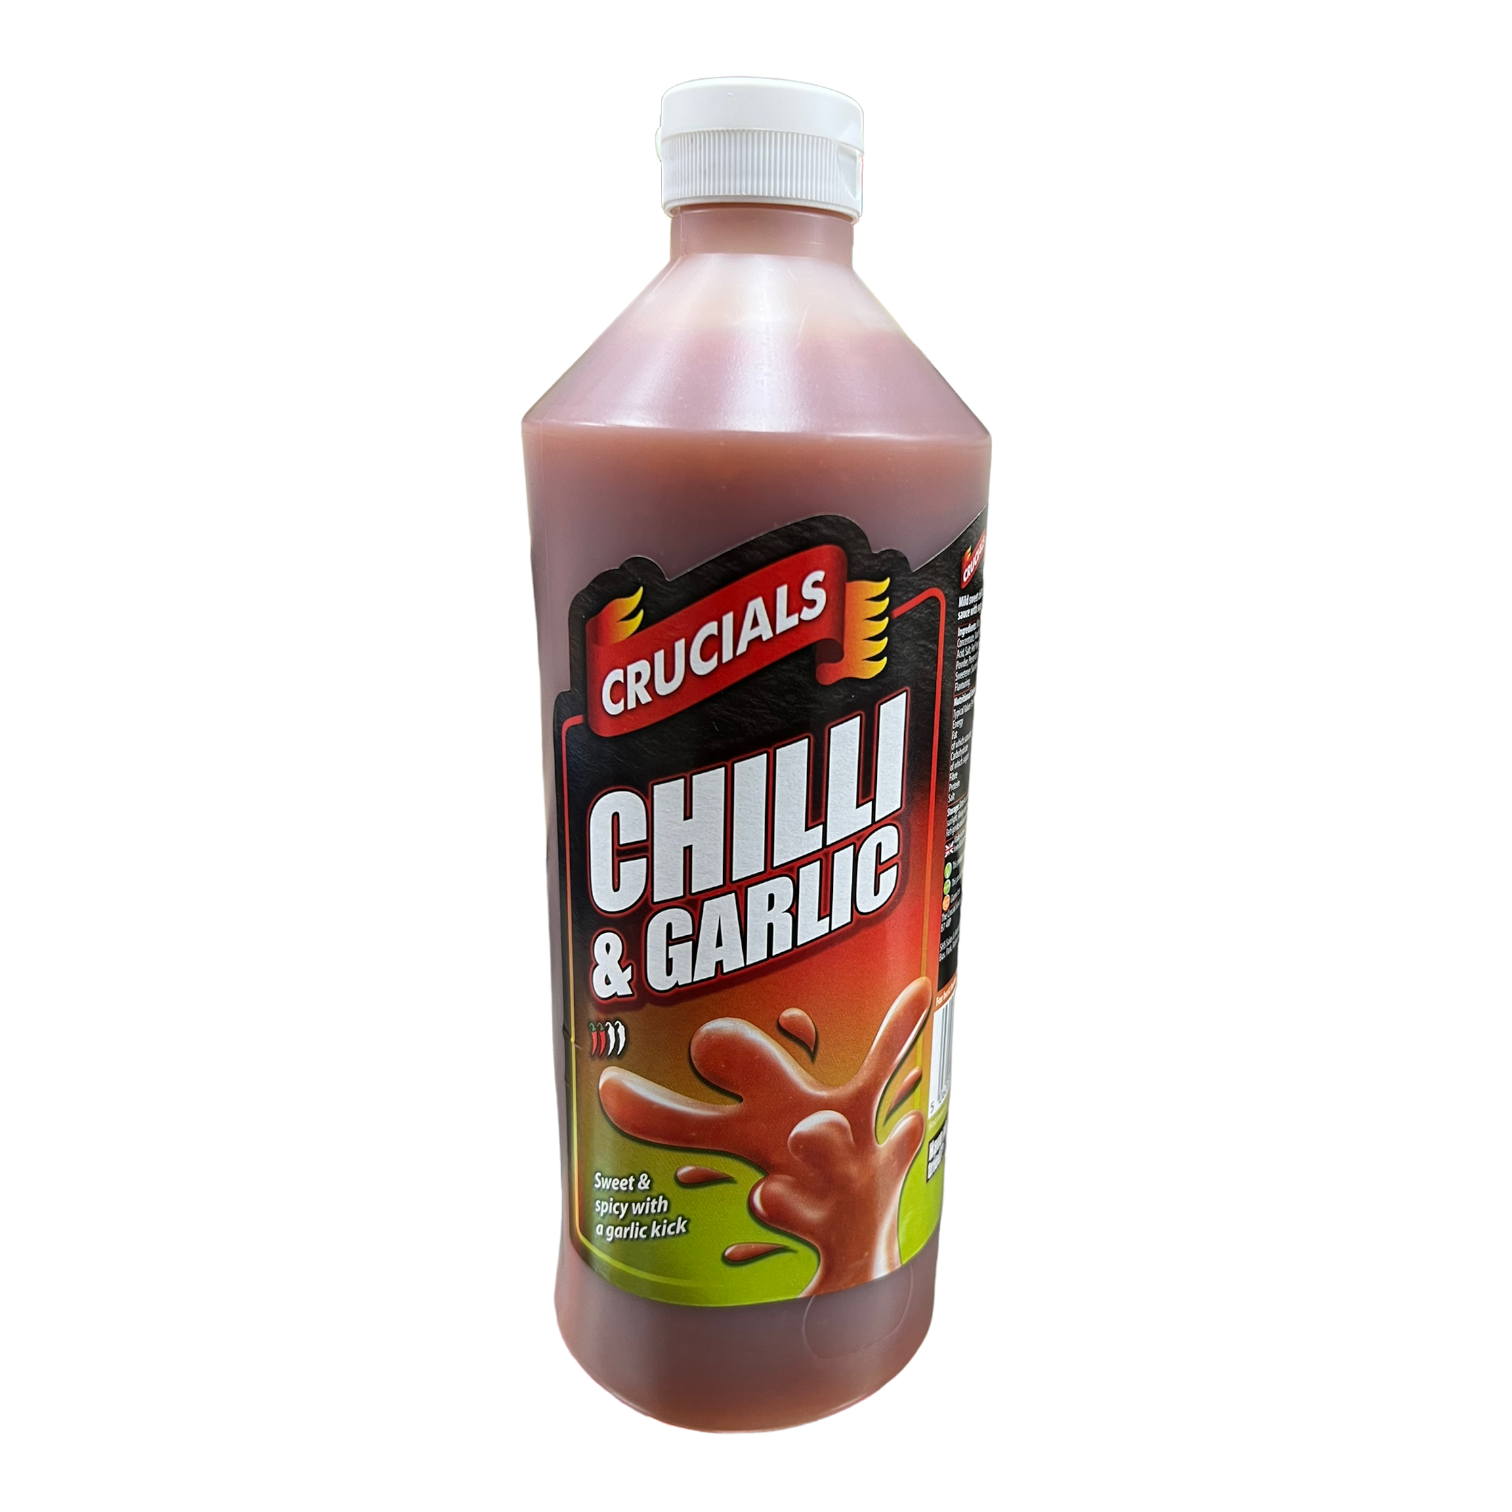 Crucials Chilli & Garlic Sauce